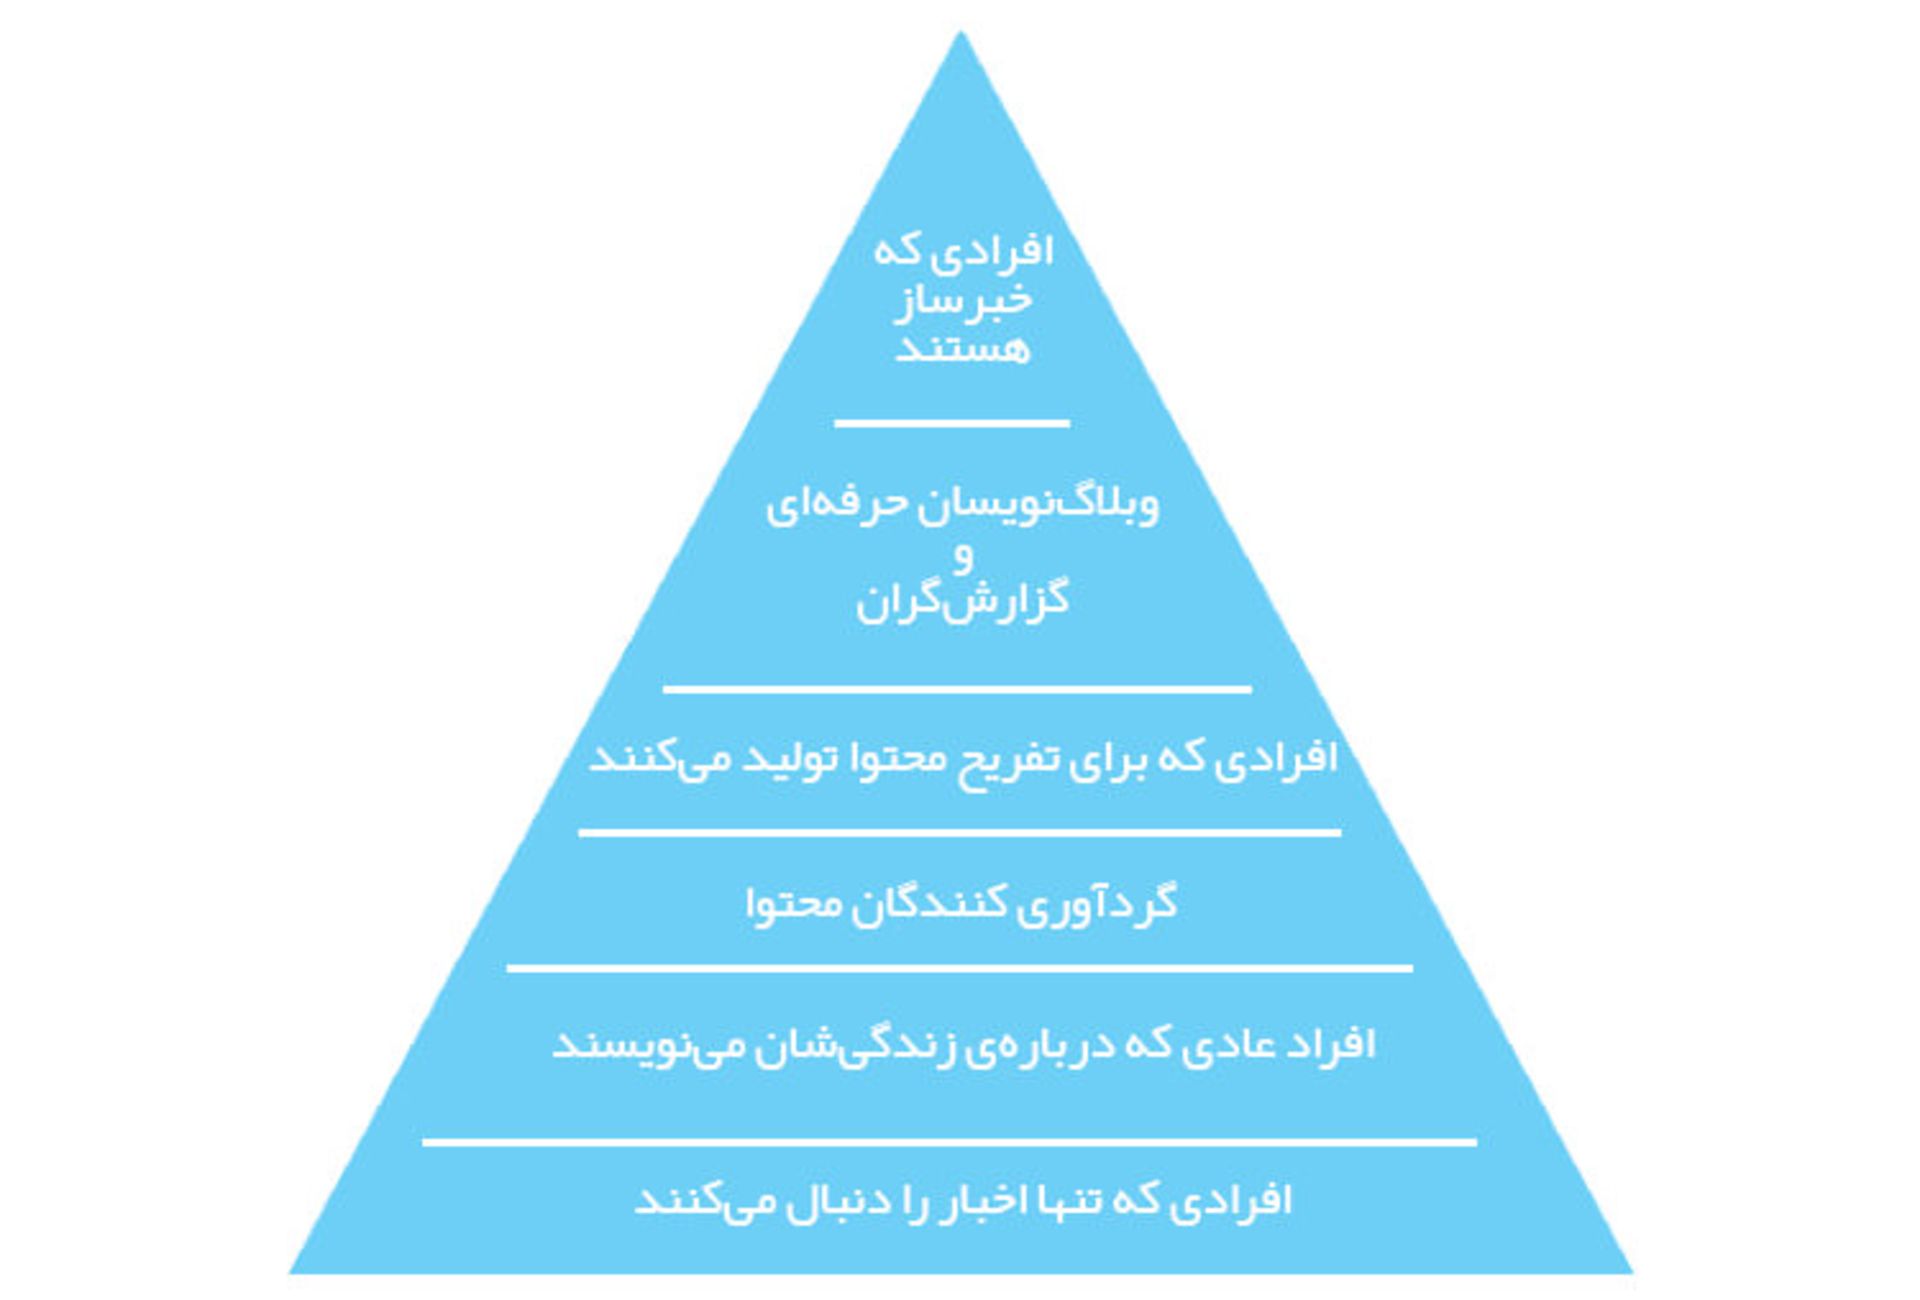 مرجع متخصصين ايران هرم عظمت توييتري / Pyramid of Twitter Greatness